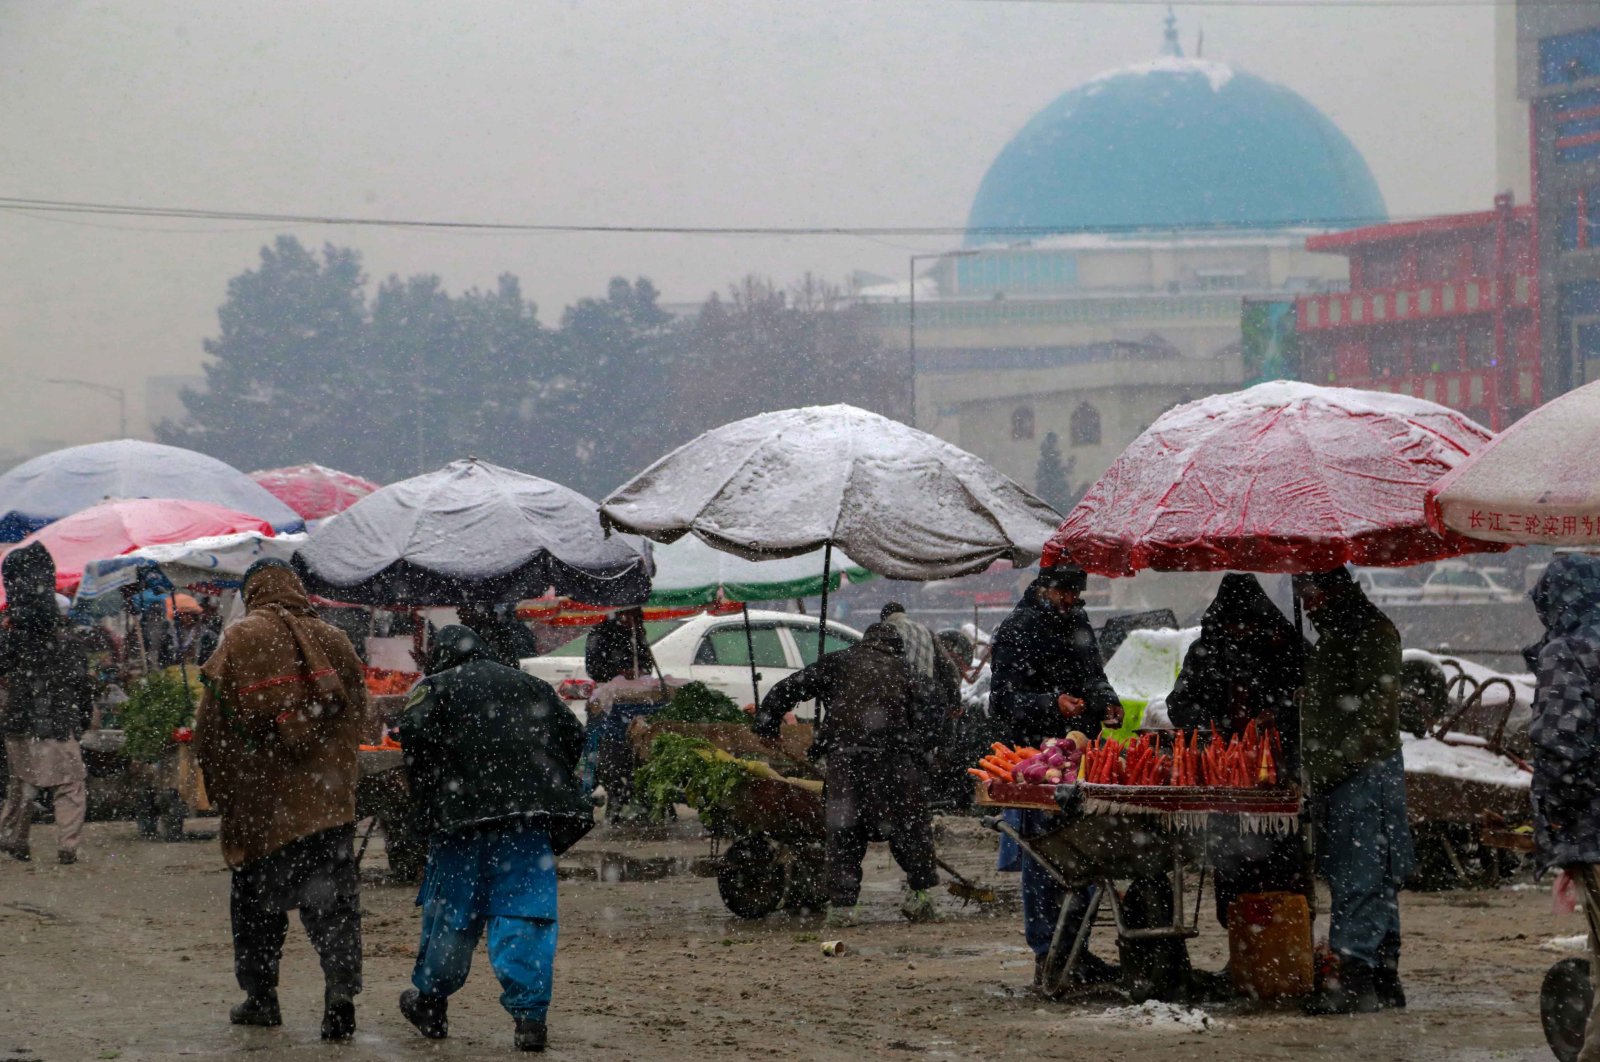 Pedestrians pass street vendors as snow falls in Kabul, Afghanistan, Jan. 3, 2022. (EPA Photo)